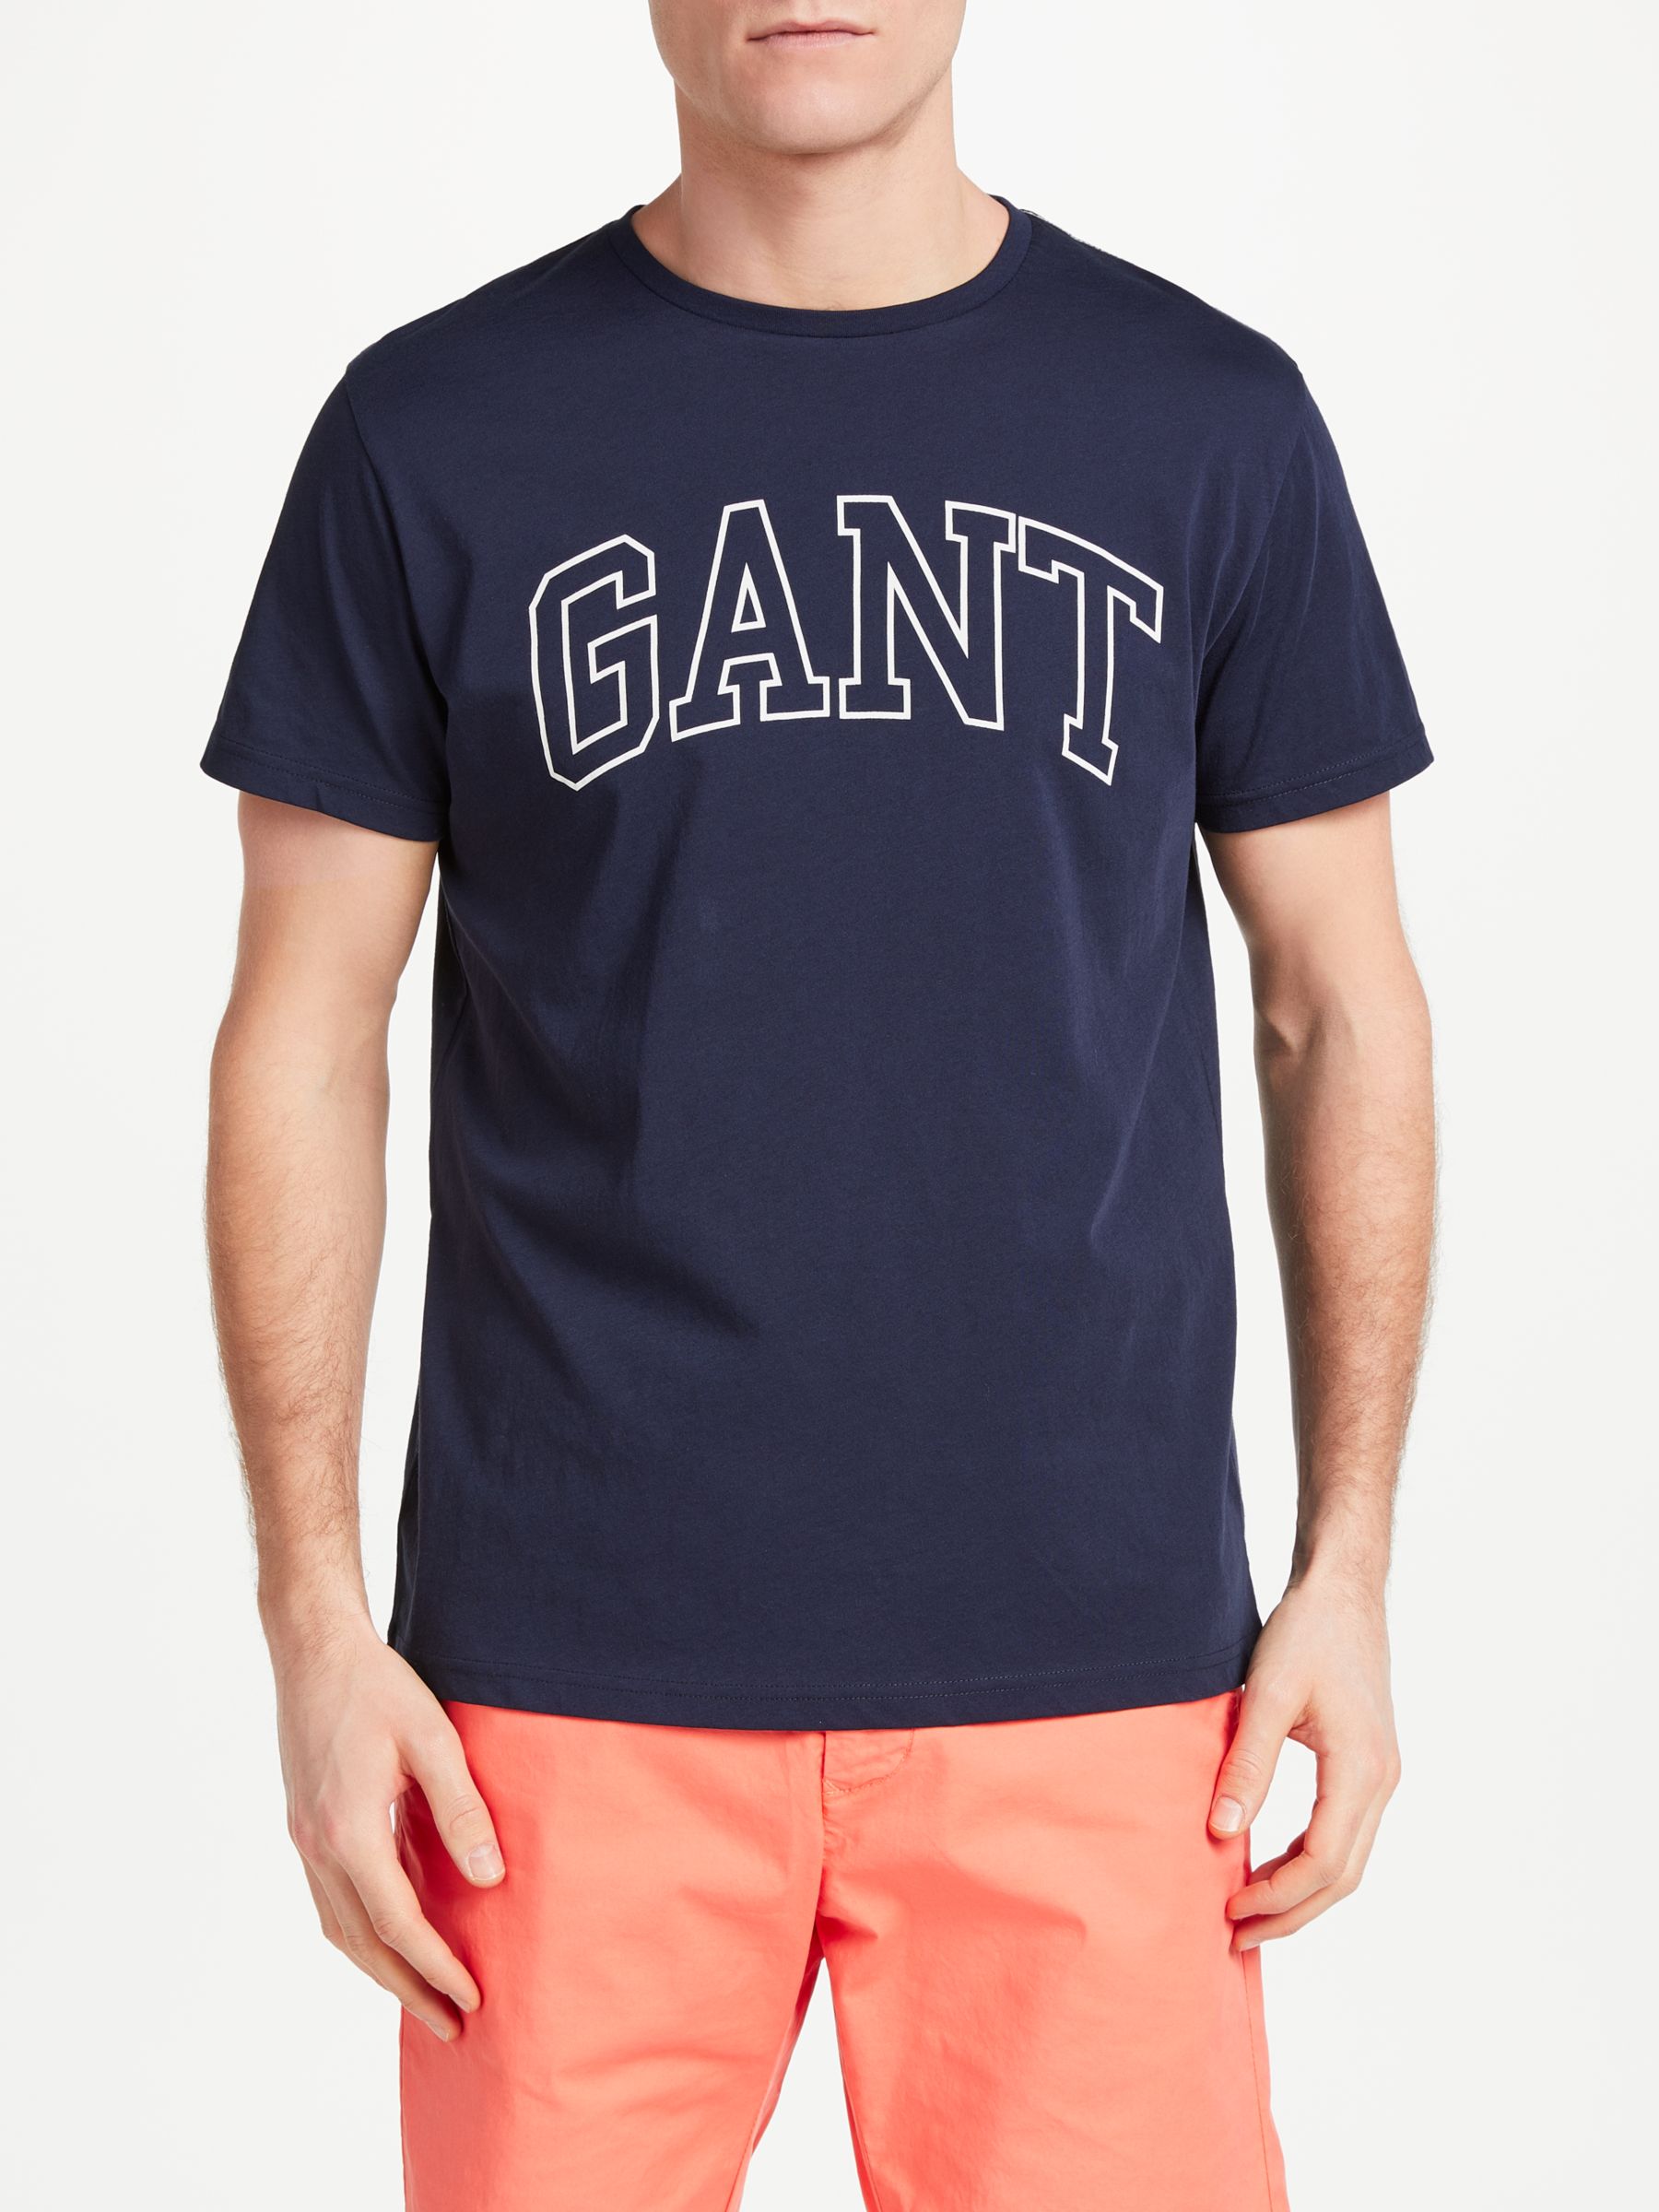 Gant Outline Print Cotton T-Shirt, Navy, M